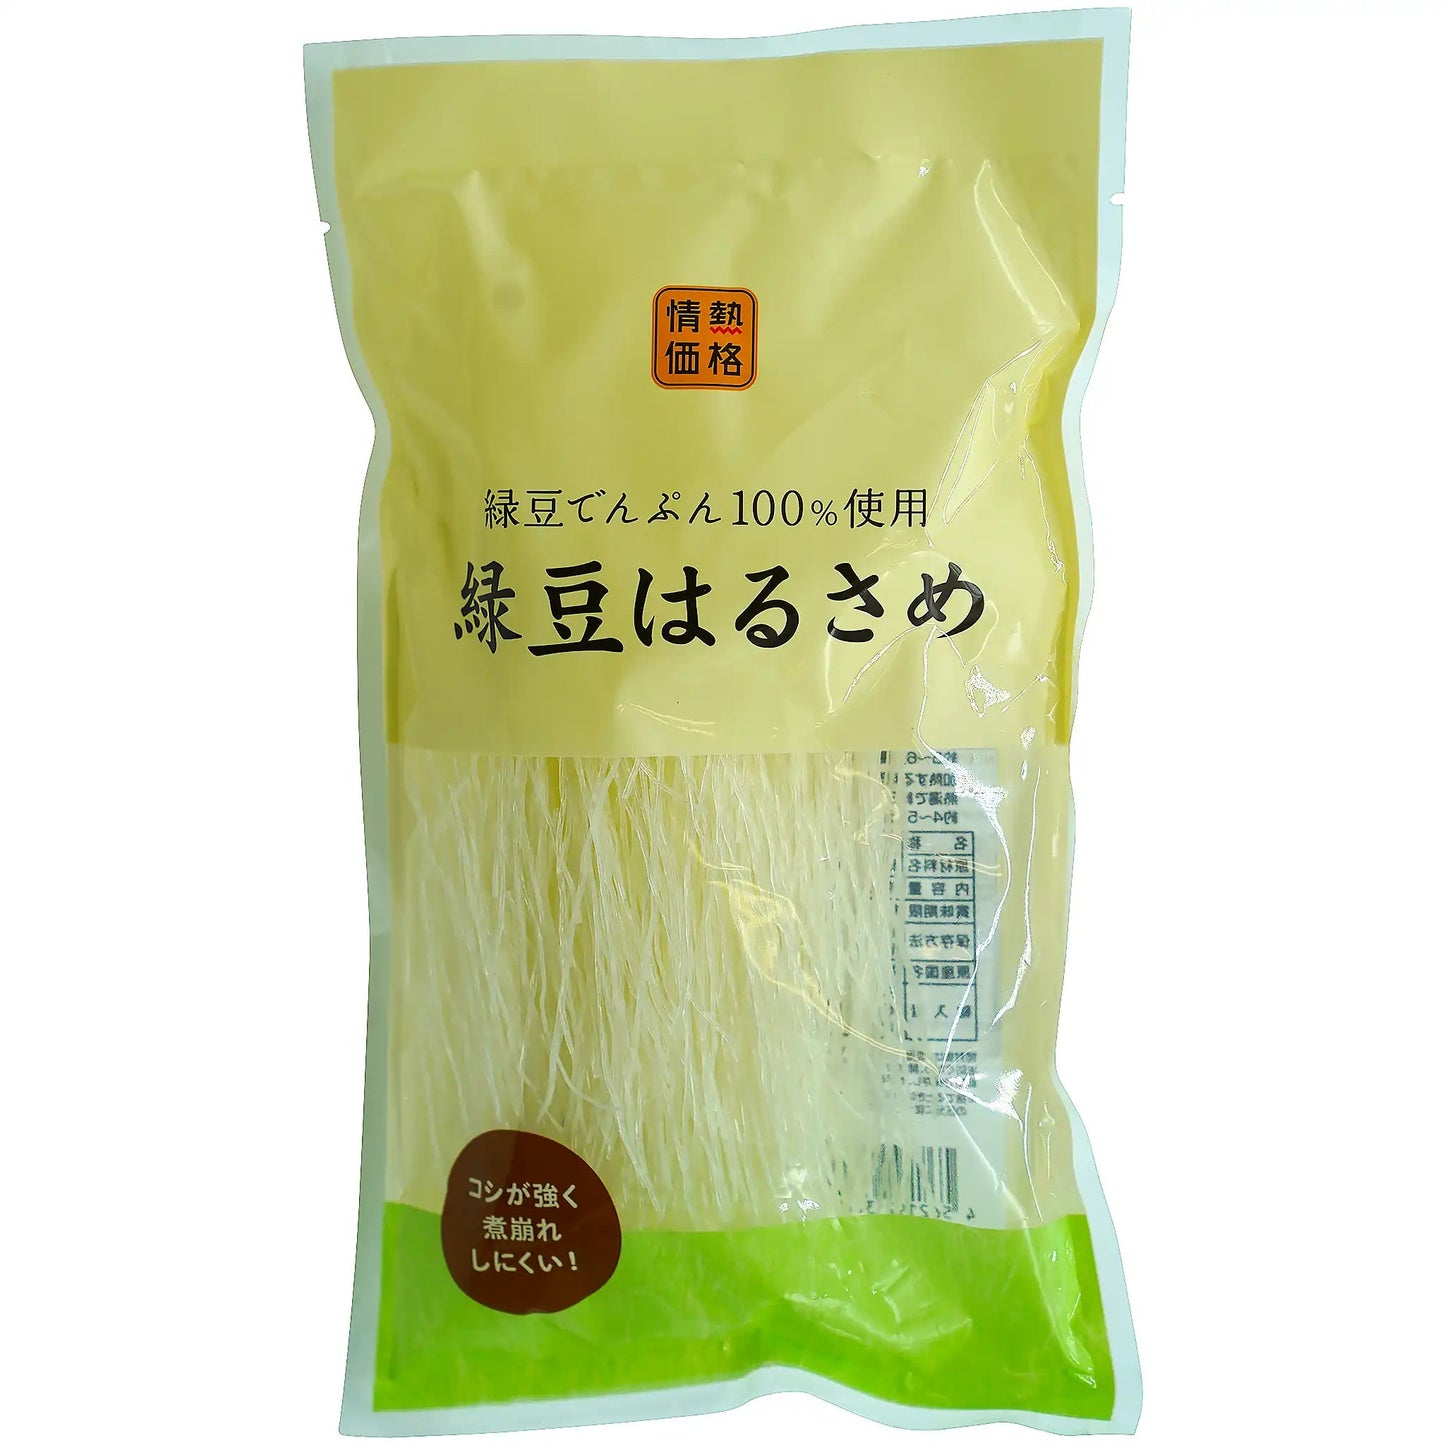 Jonetz Virmicelli Noodles 3.38 oz - Tokyo Central - Dried Noodles - Jonetz -